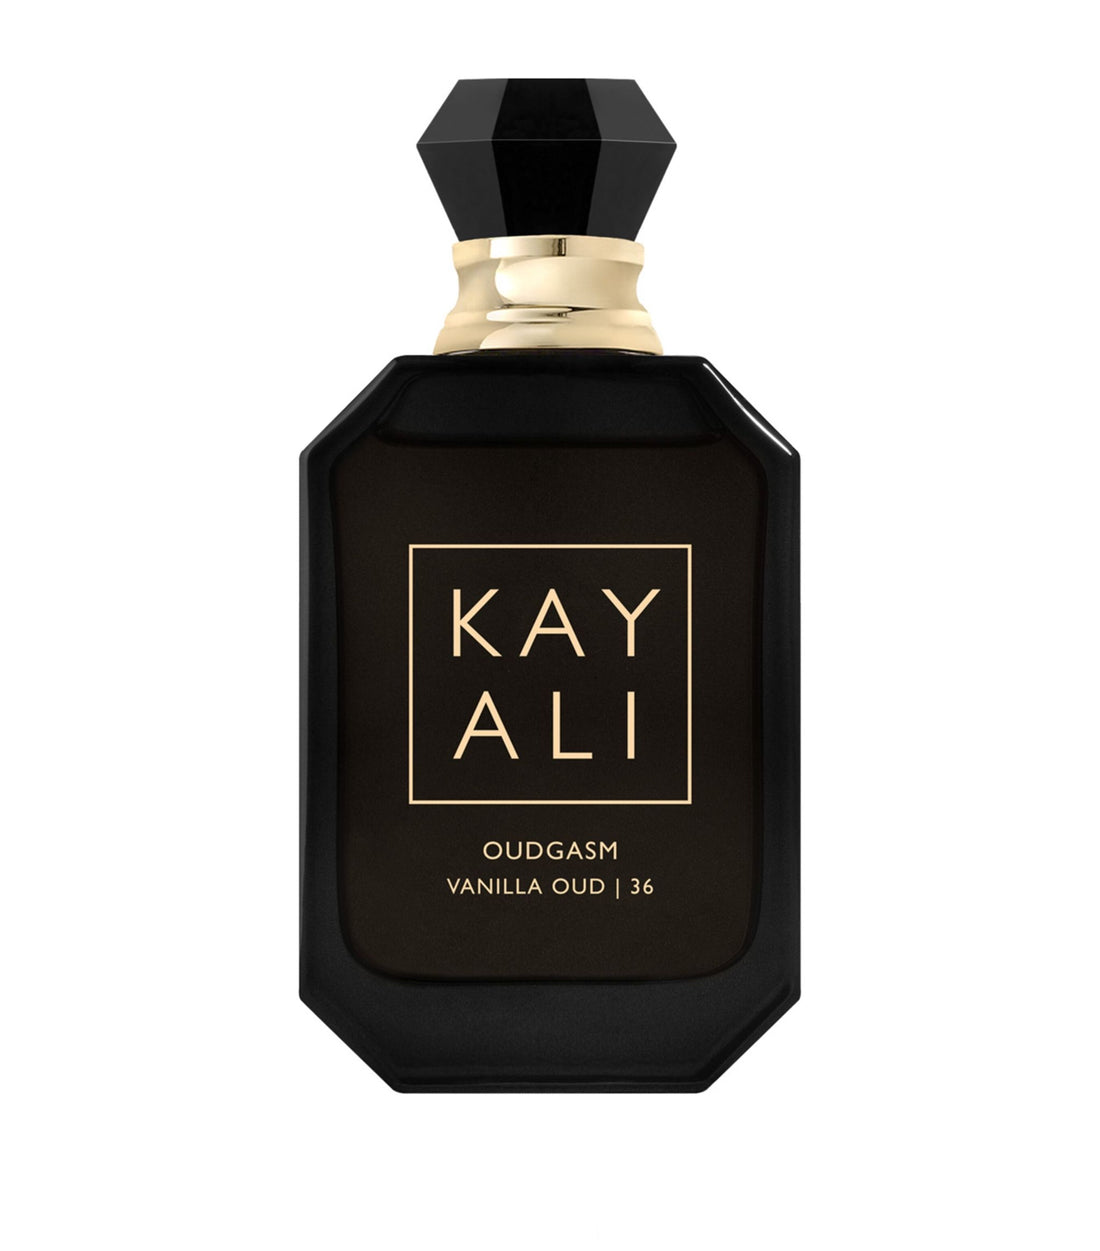 Kayali Oudgasm Vanilla Oud 36 Eau De Parfum Samples